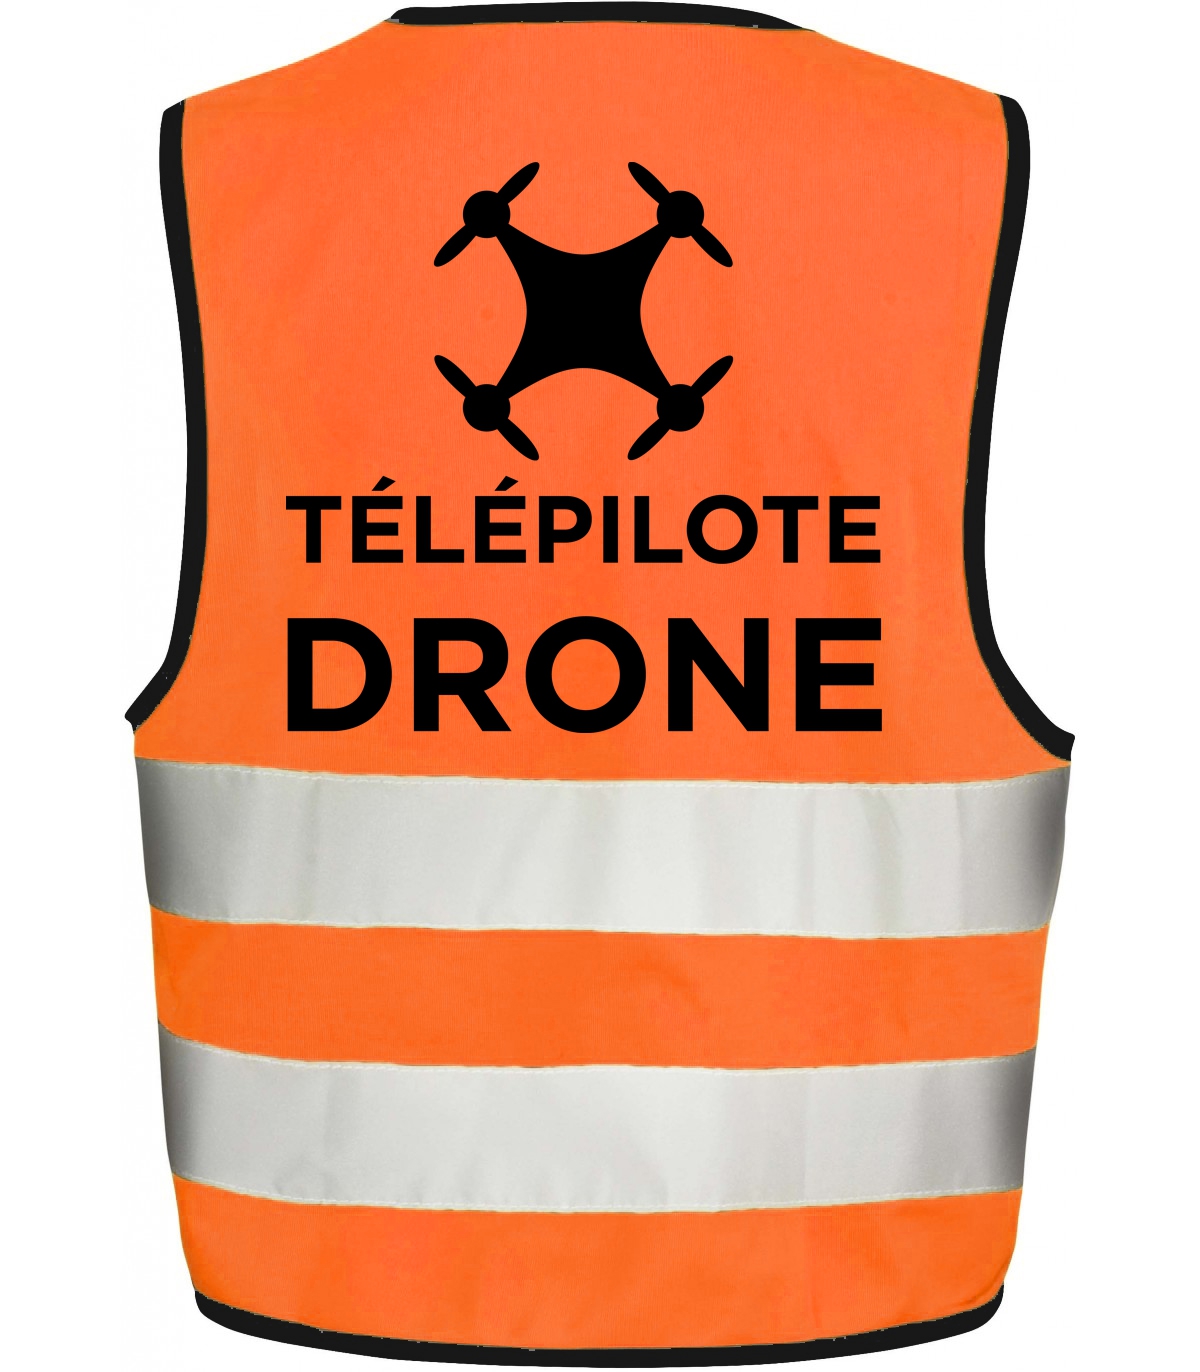 https://www.studiosport.fr/upload/image/gilet-de-securite-orange-pour-telepilote-p-image-227328-grande.jpg